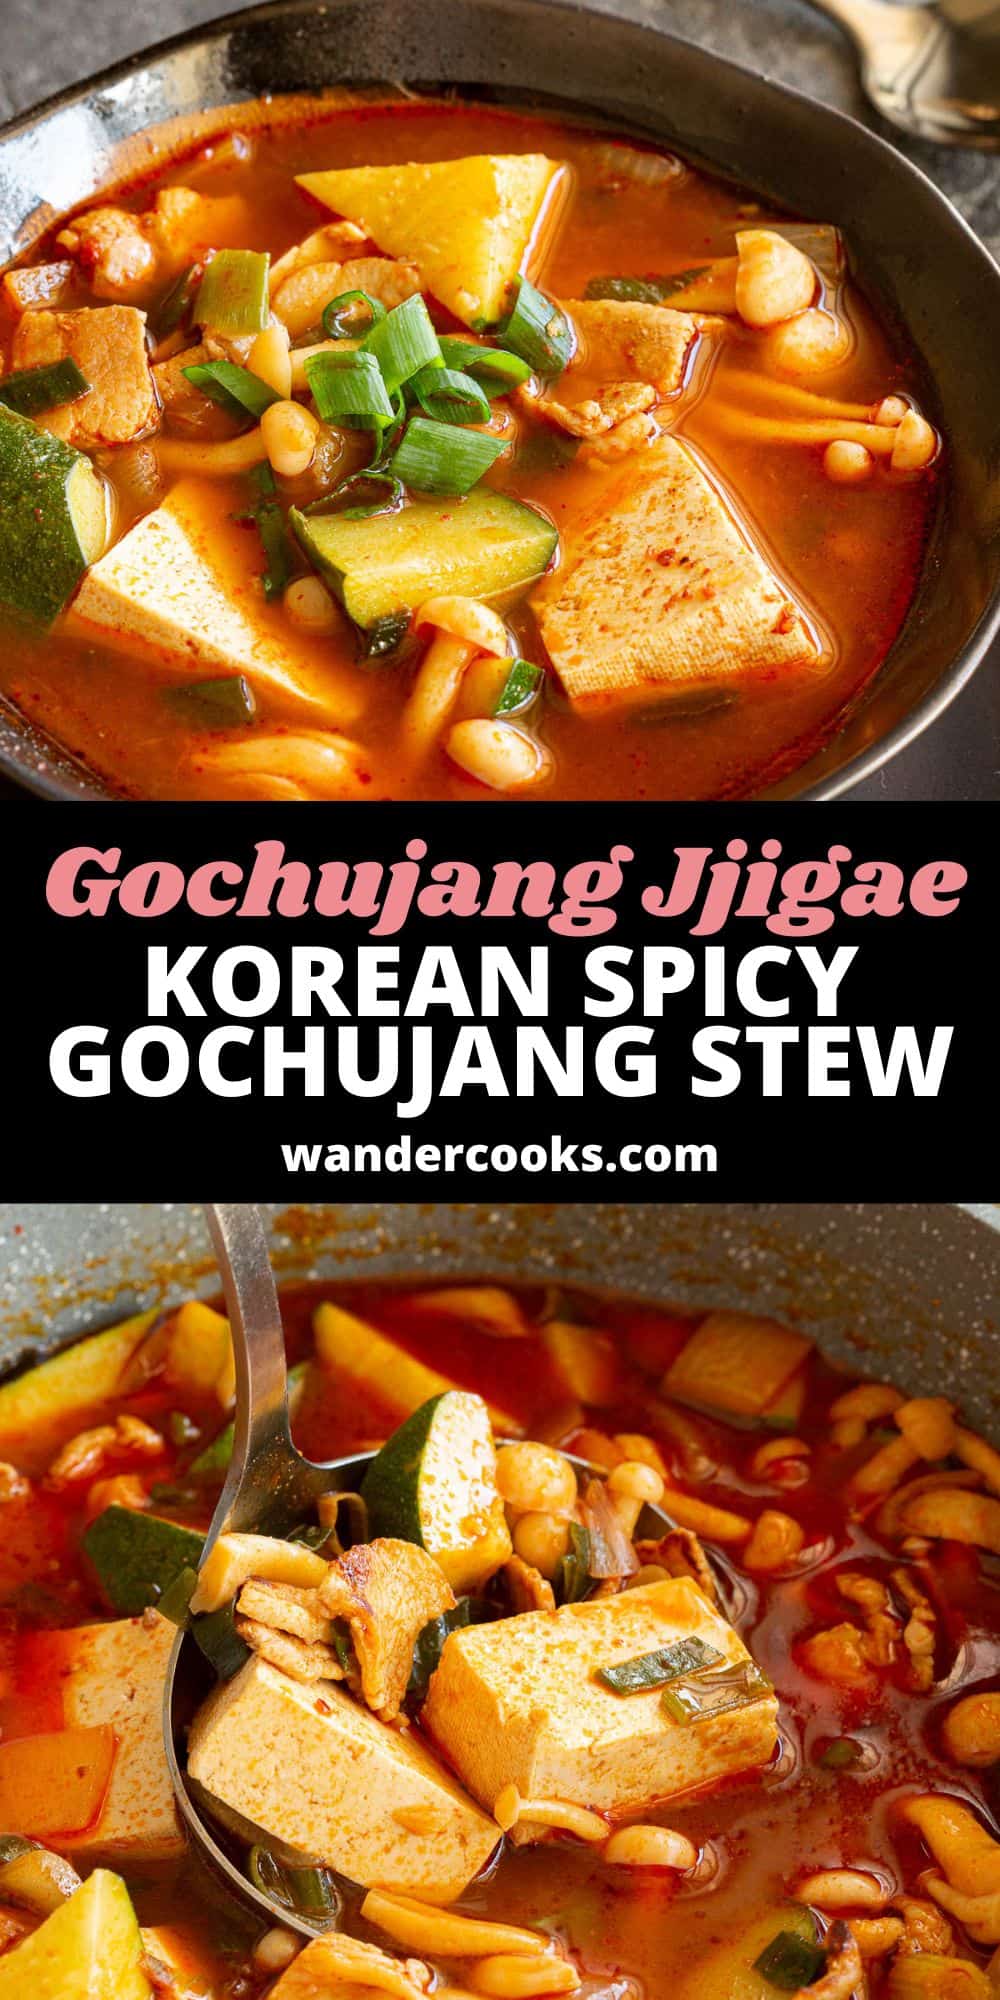 Korean Spicy Gochujang Stew - Gochujang Jjigae